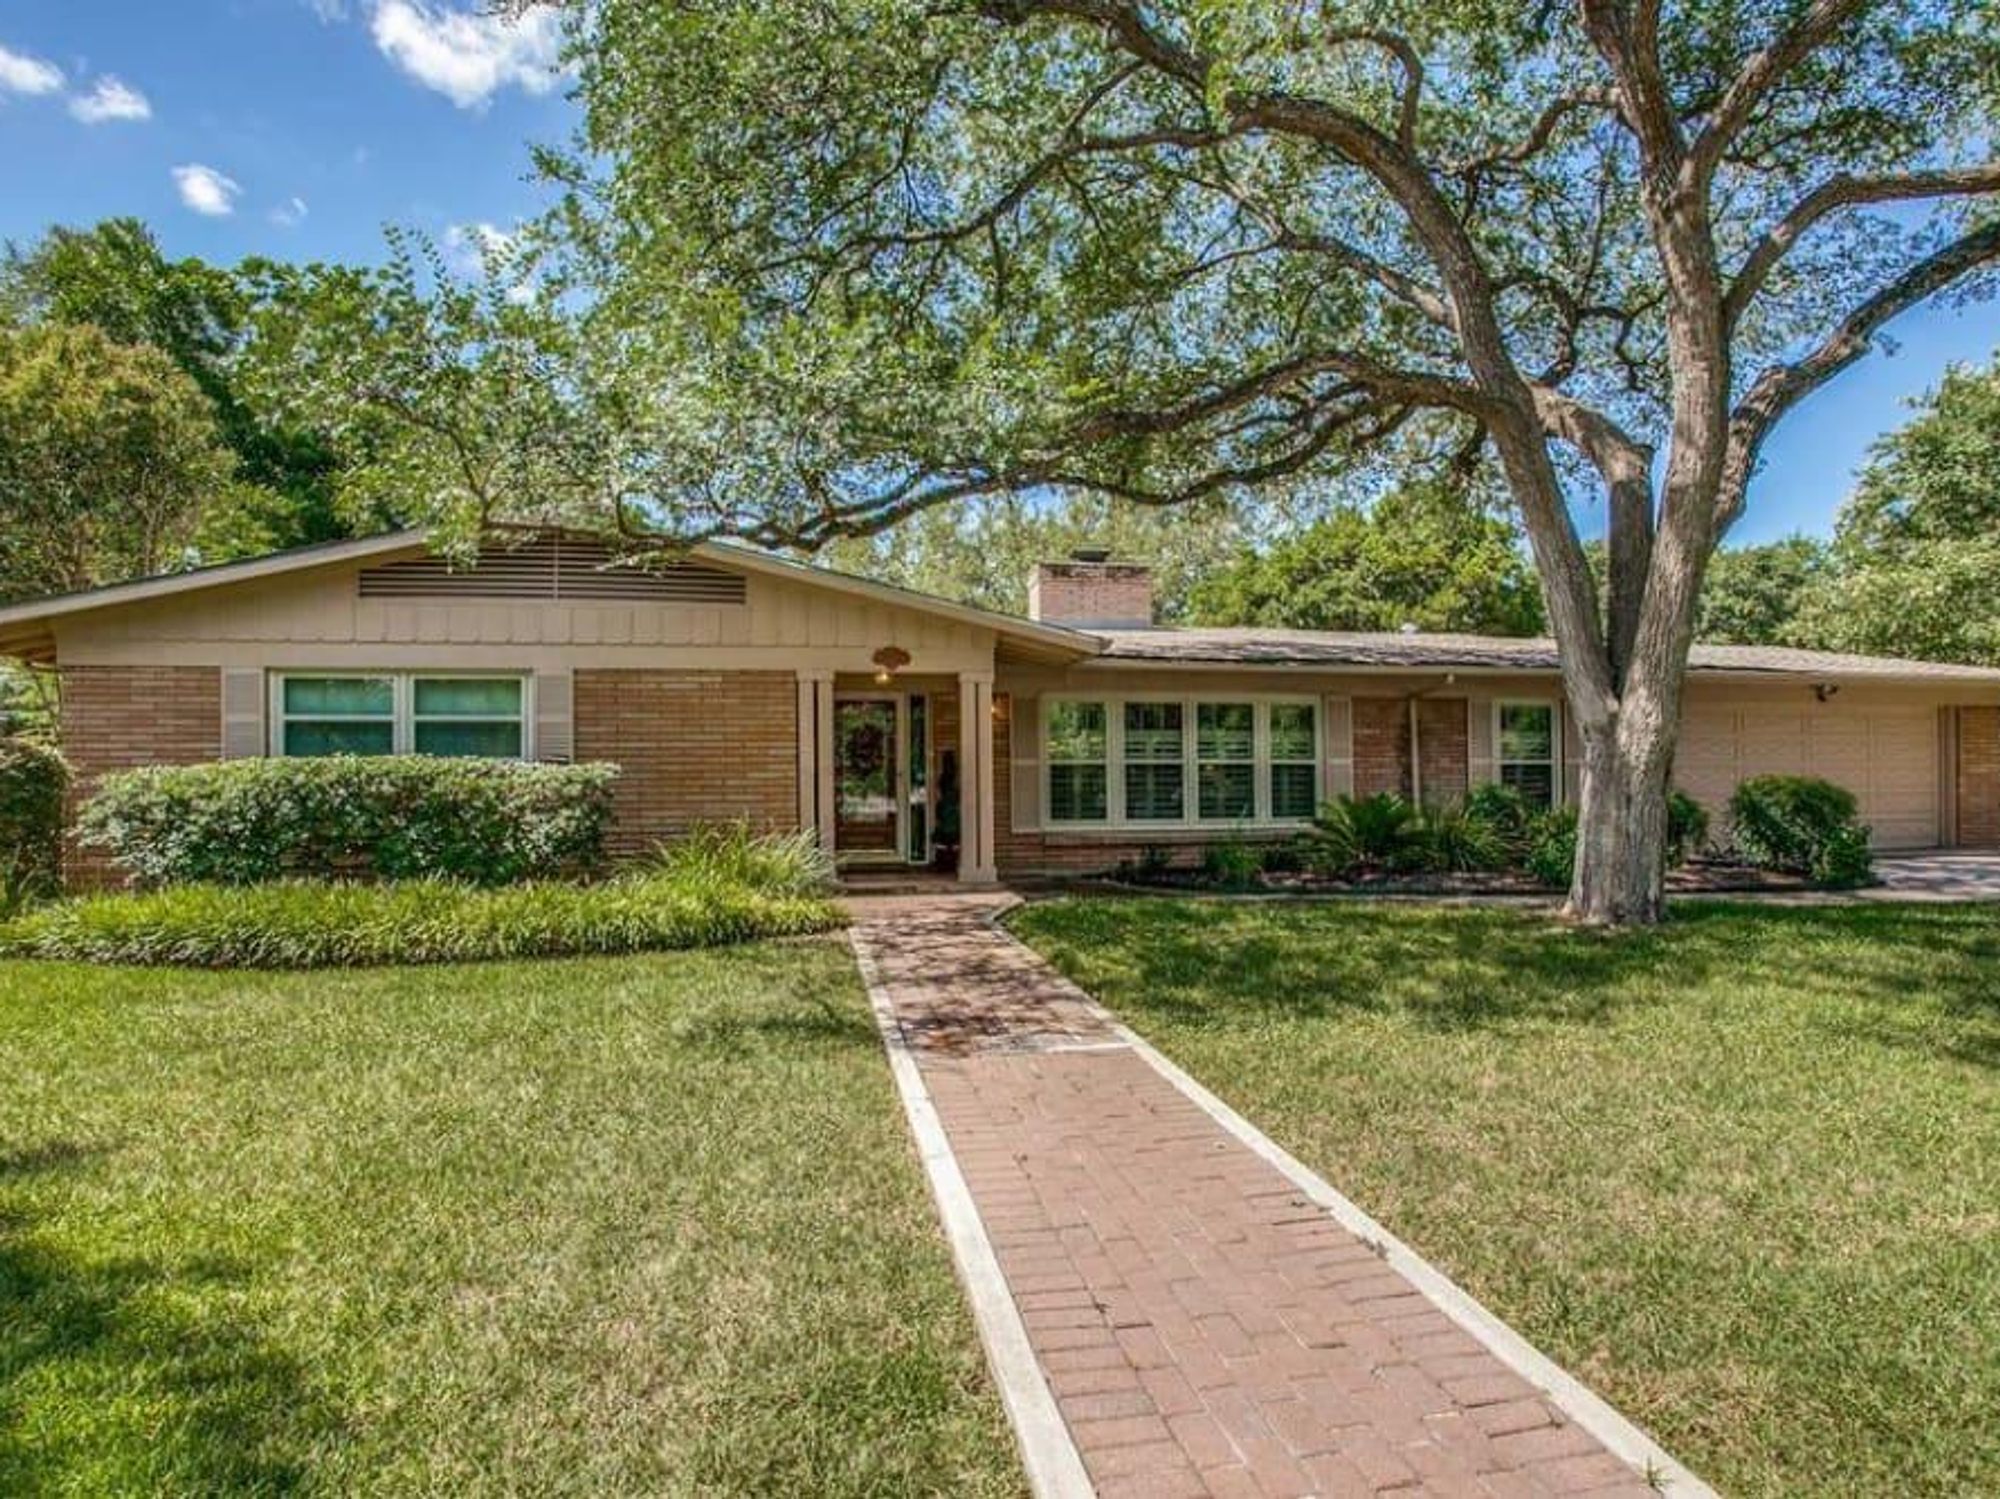 Home for sale in San Antonio's Oak Park neighborhood